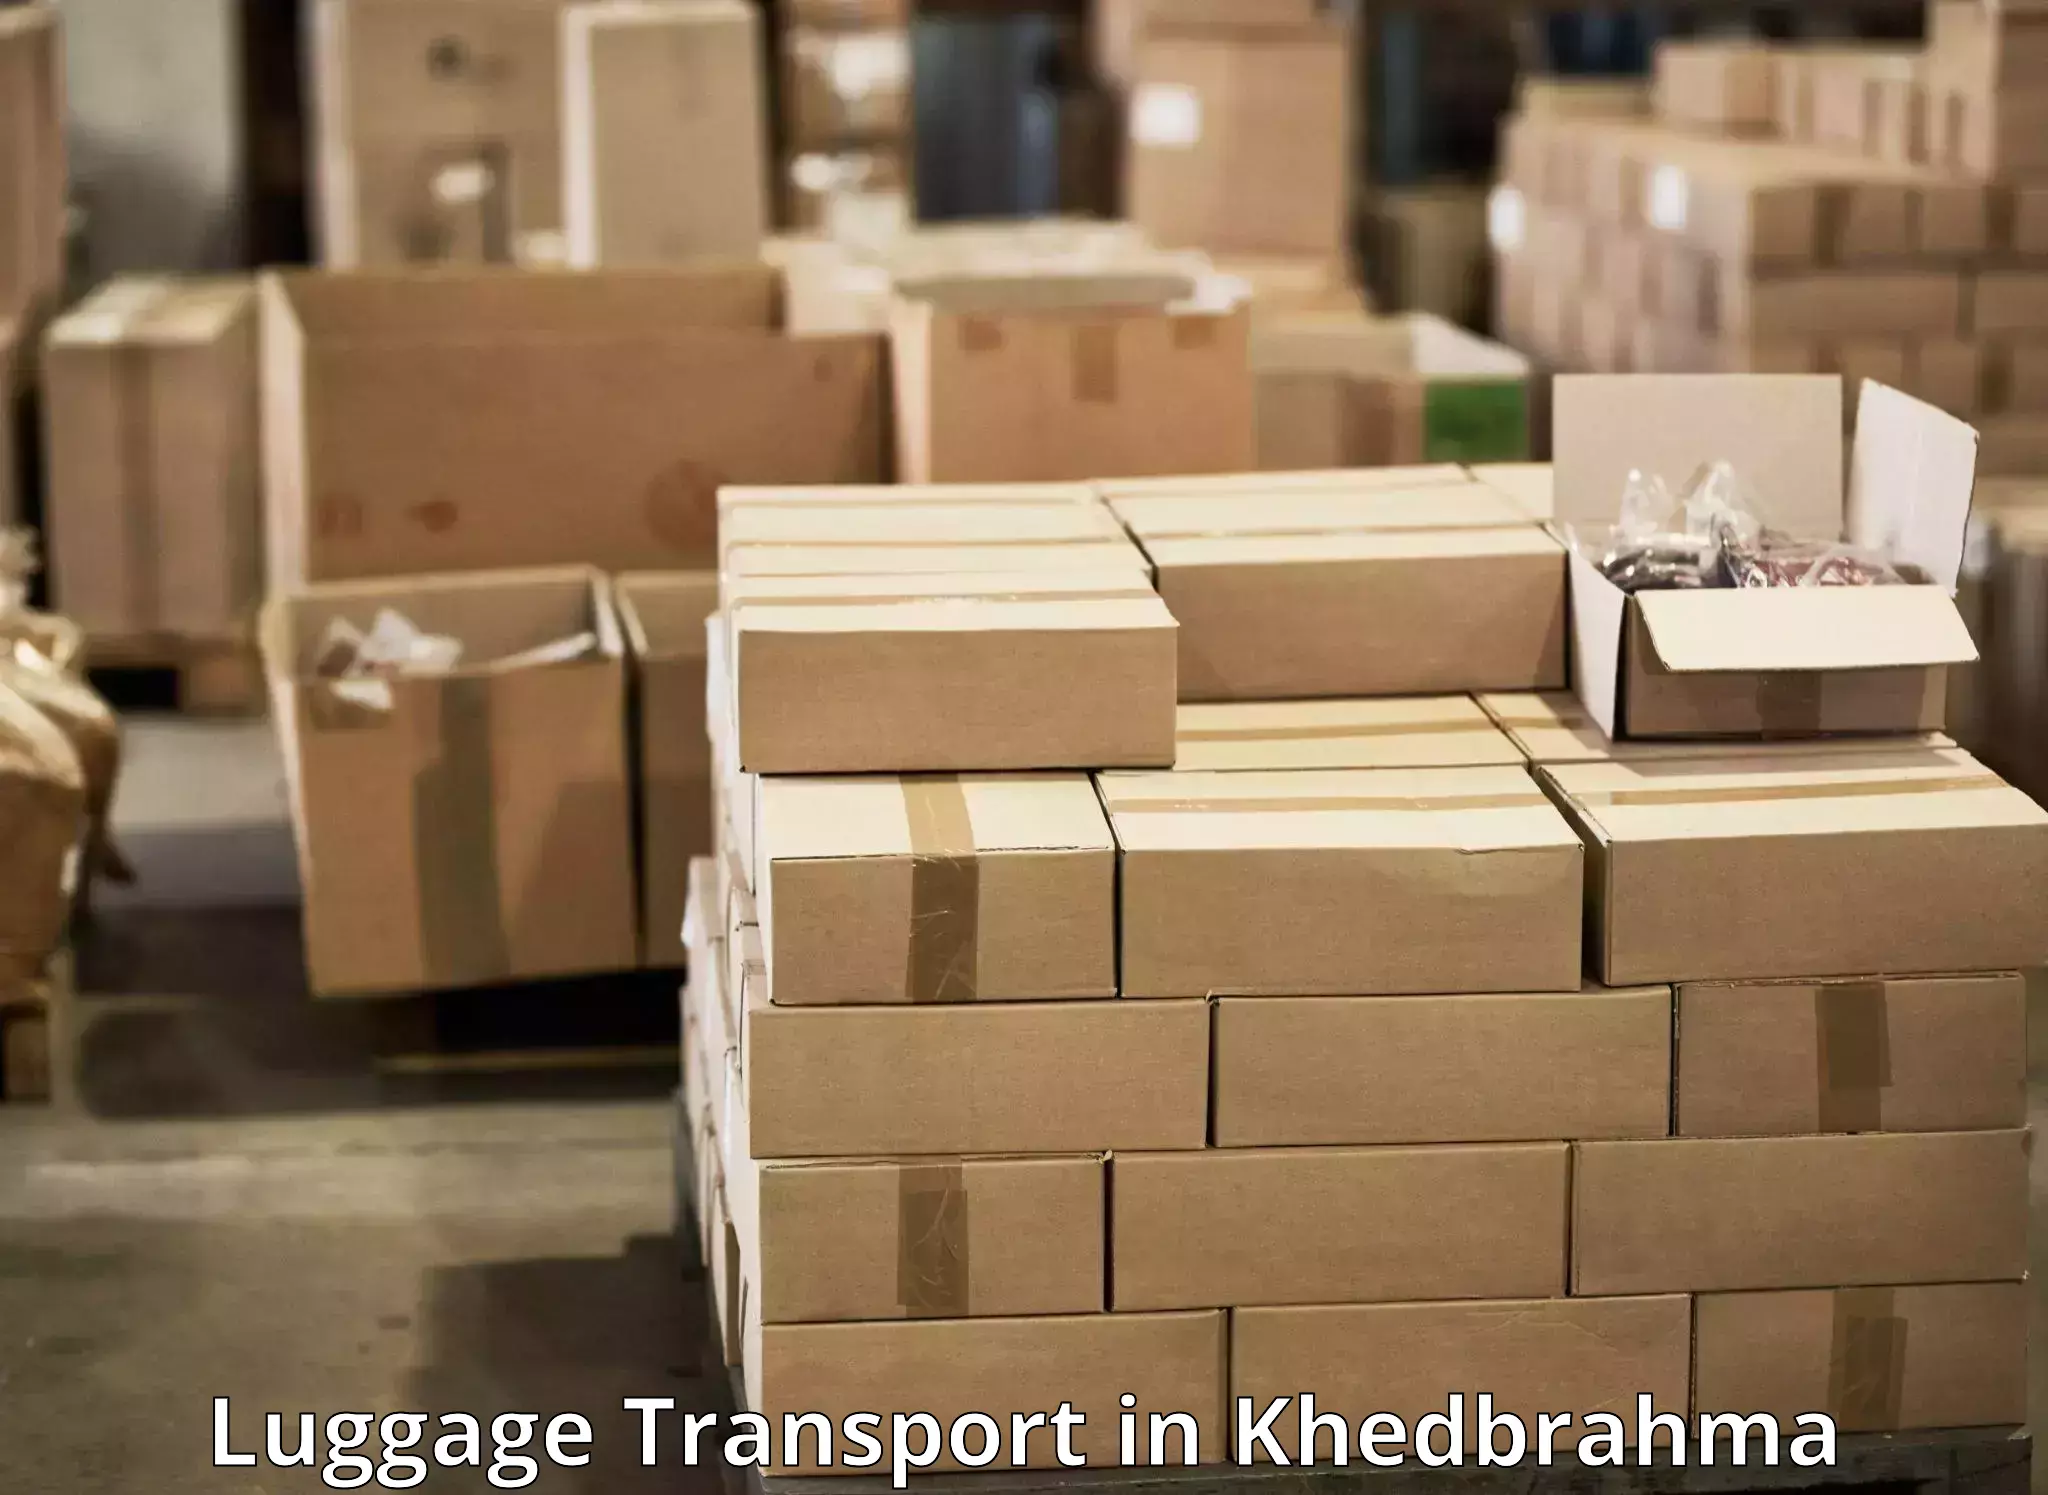 Luggage shipment logistics in Khedbrahma